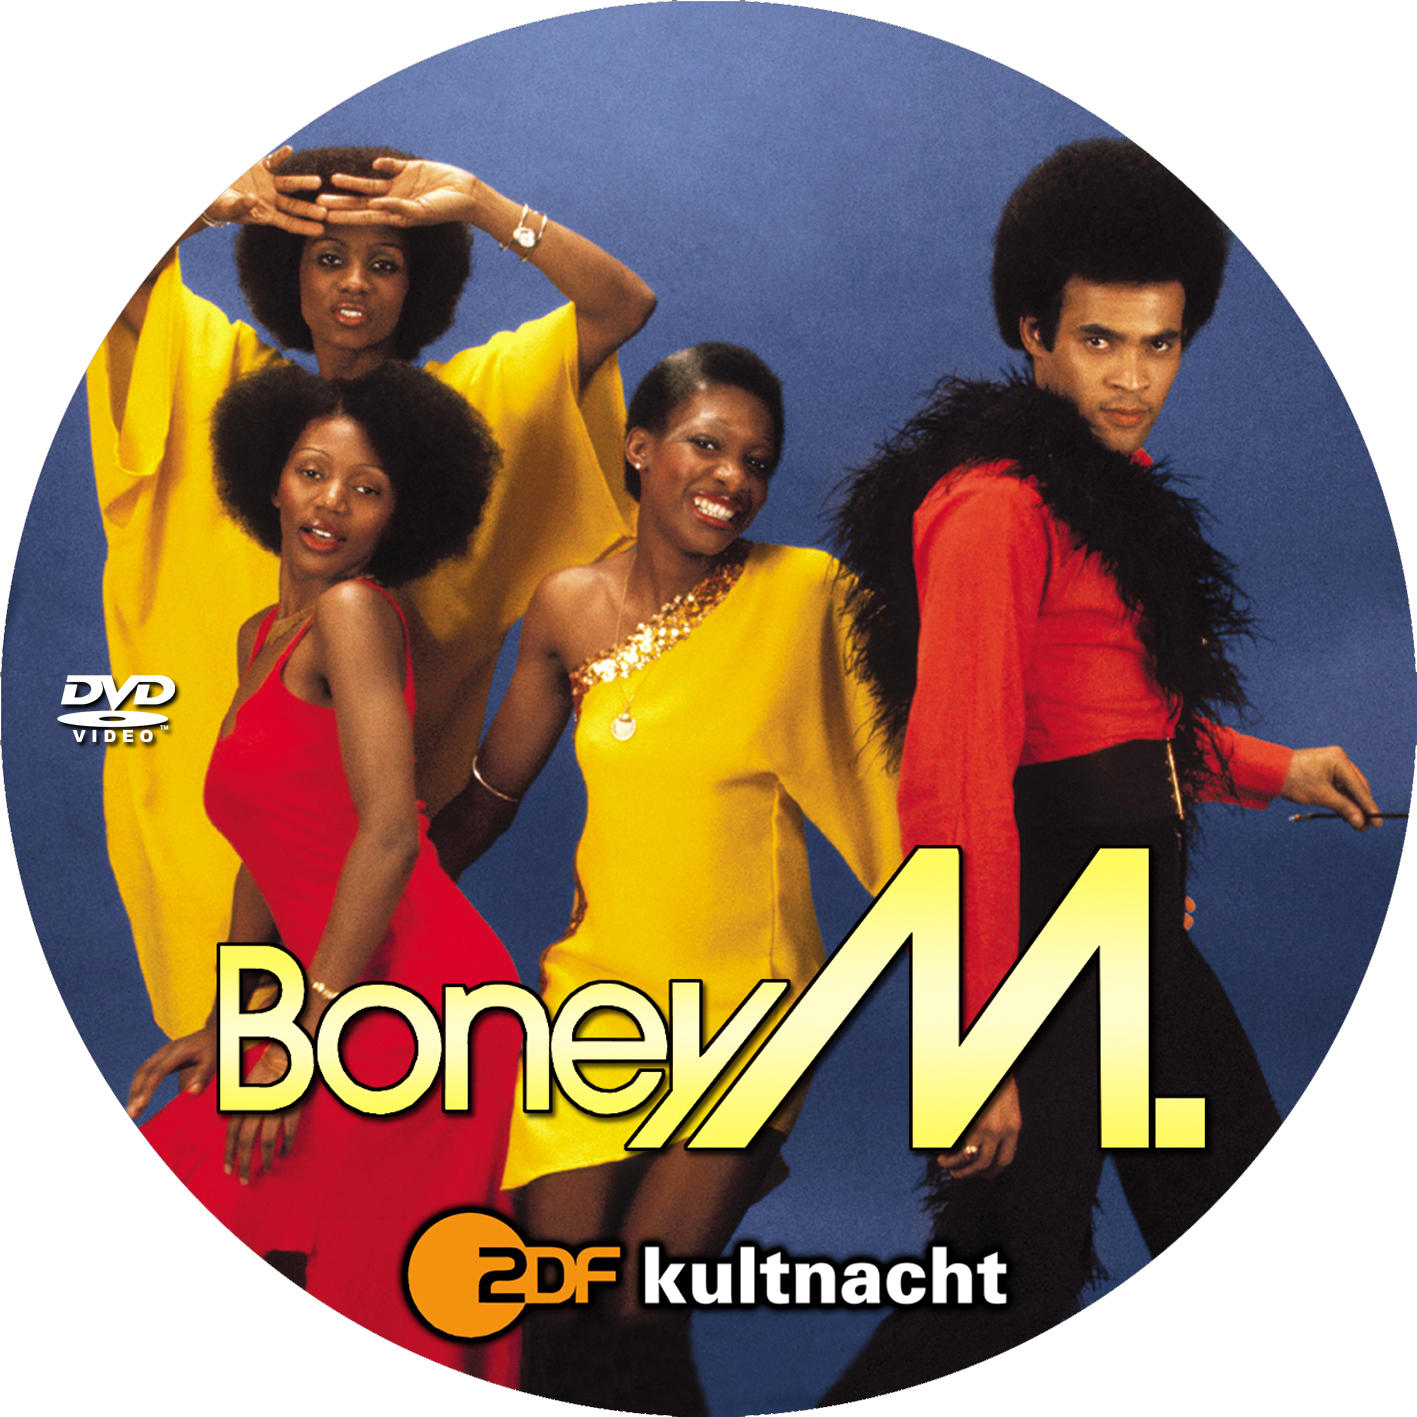 Музыка boney m. Группа Boney m.. Группа Boney m. дискография. Группа Boney m. в 80. Группа Бони м 1975г.